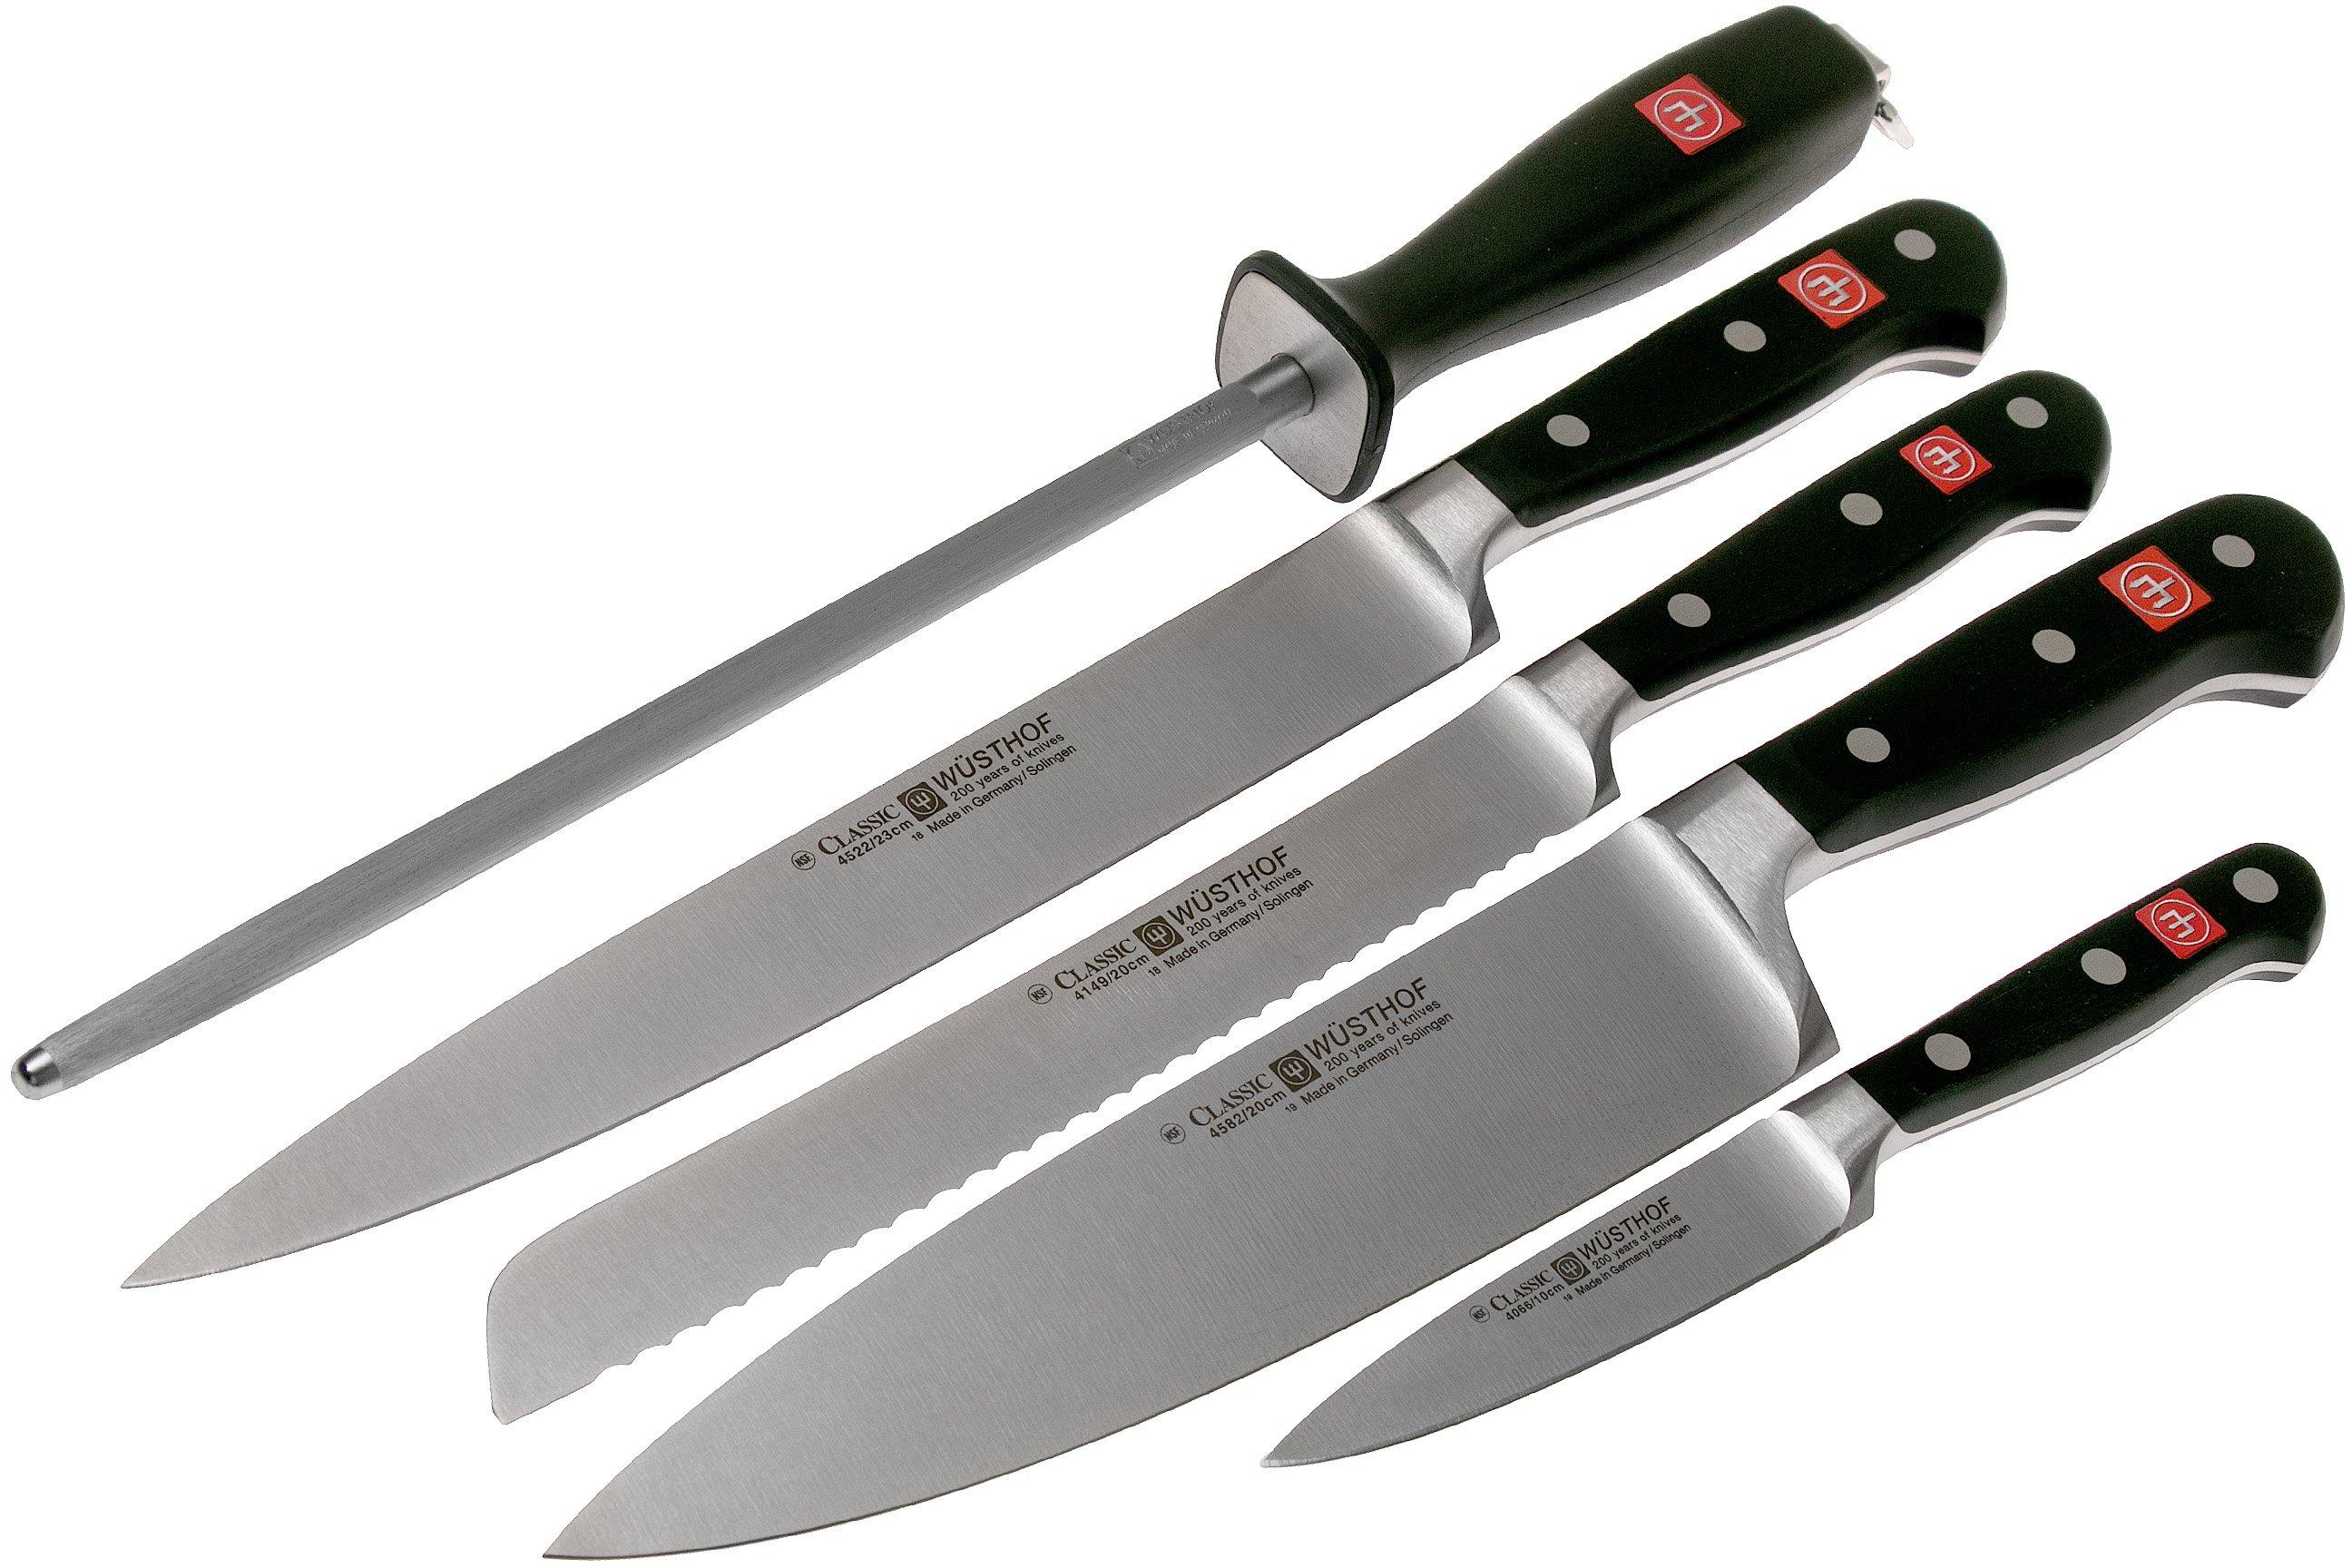 Wüsthof Classic Knife Set 5-piece, 9746 | Advantageously shopping at